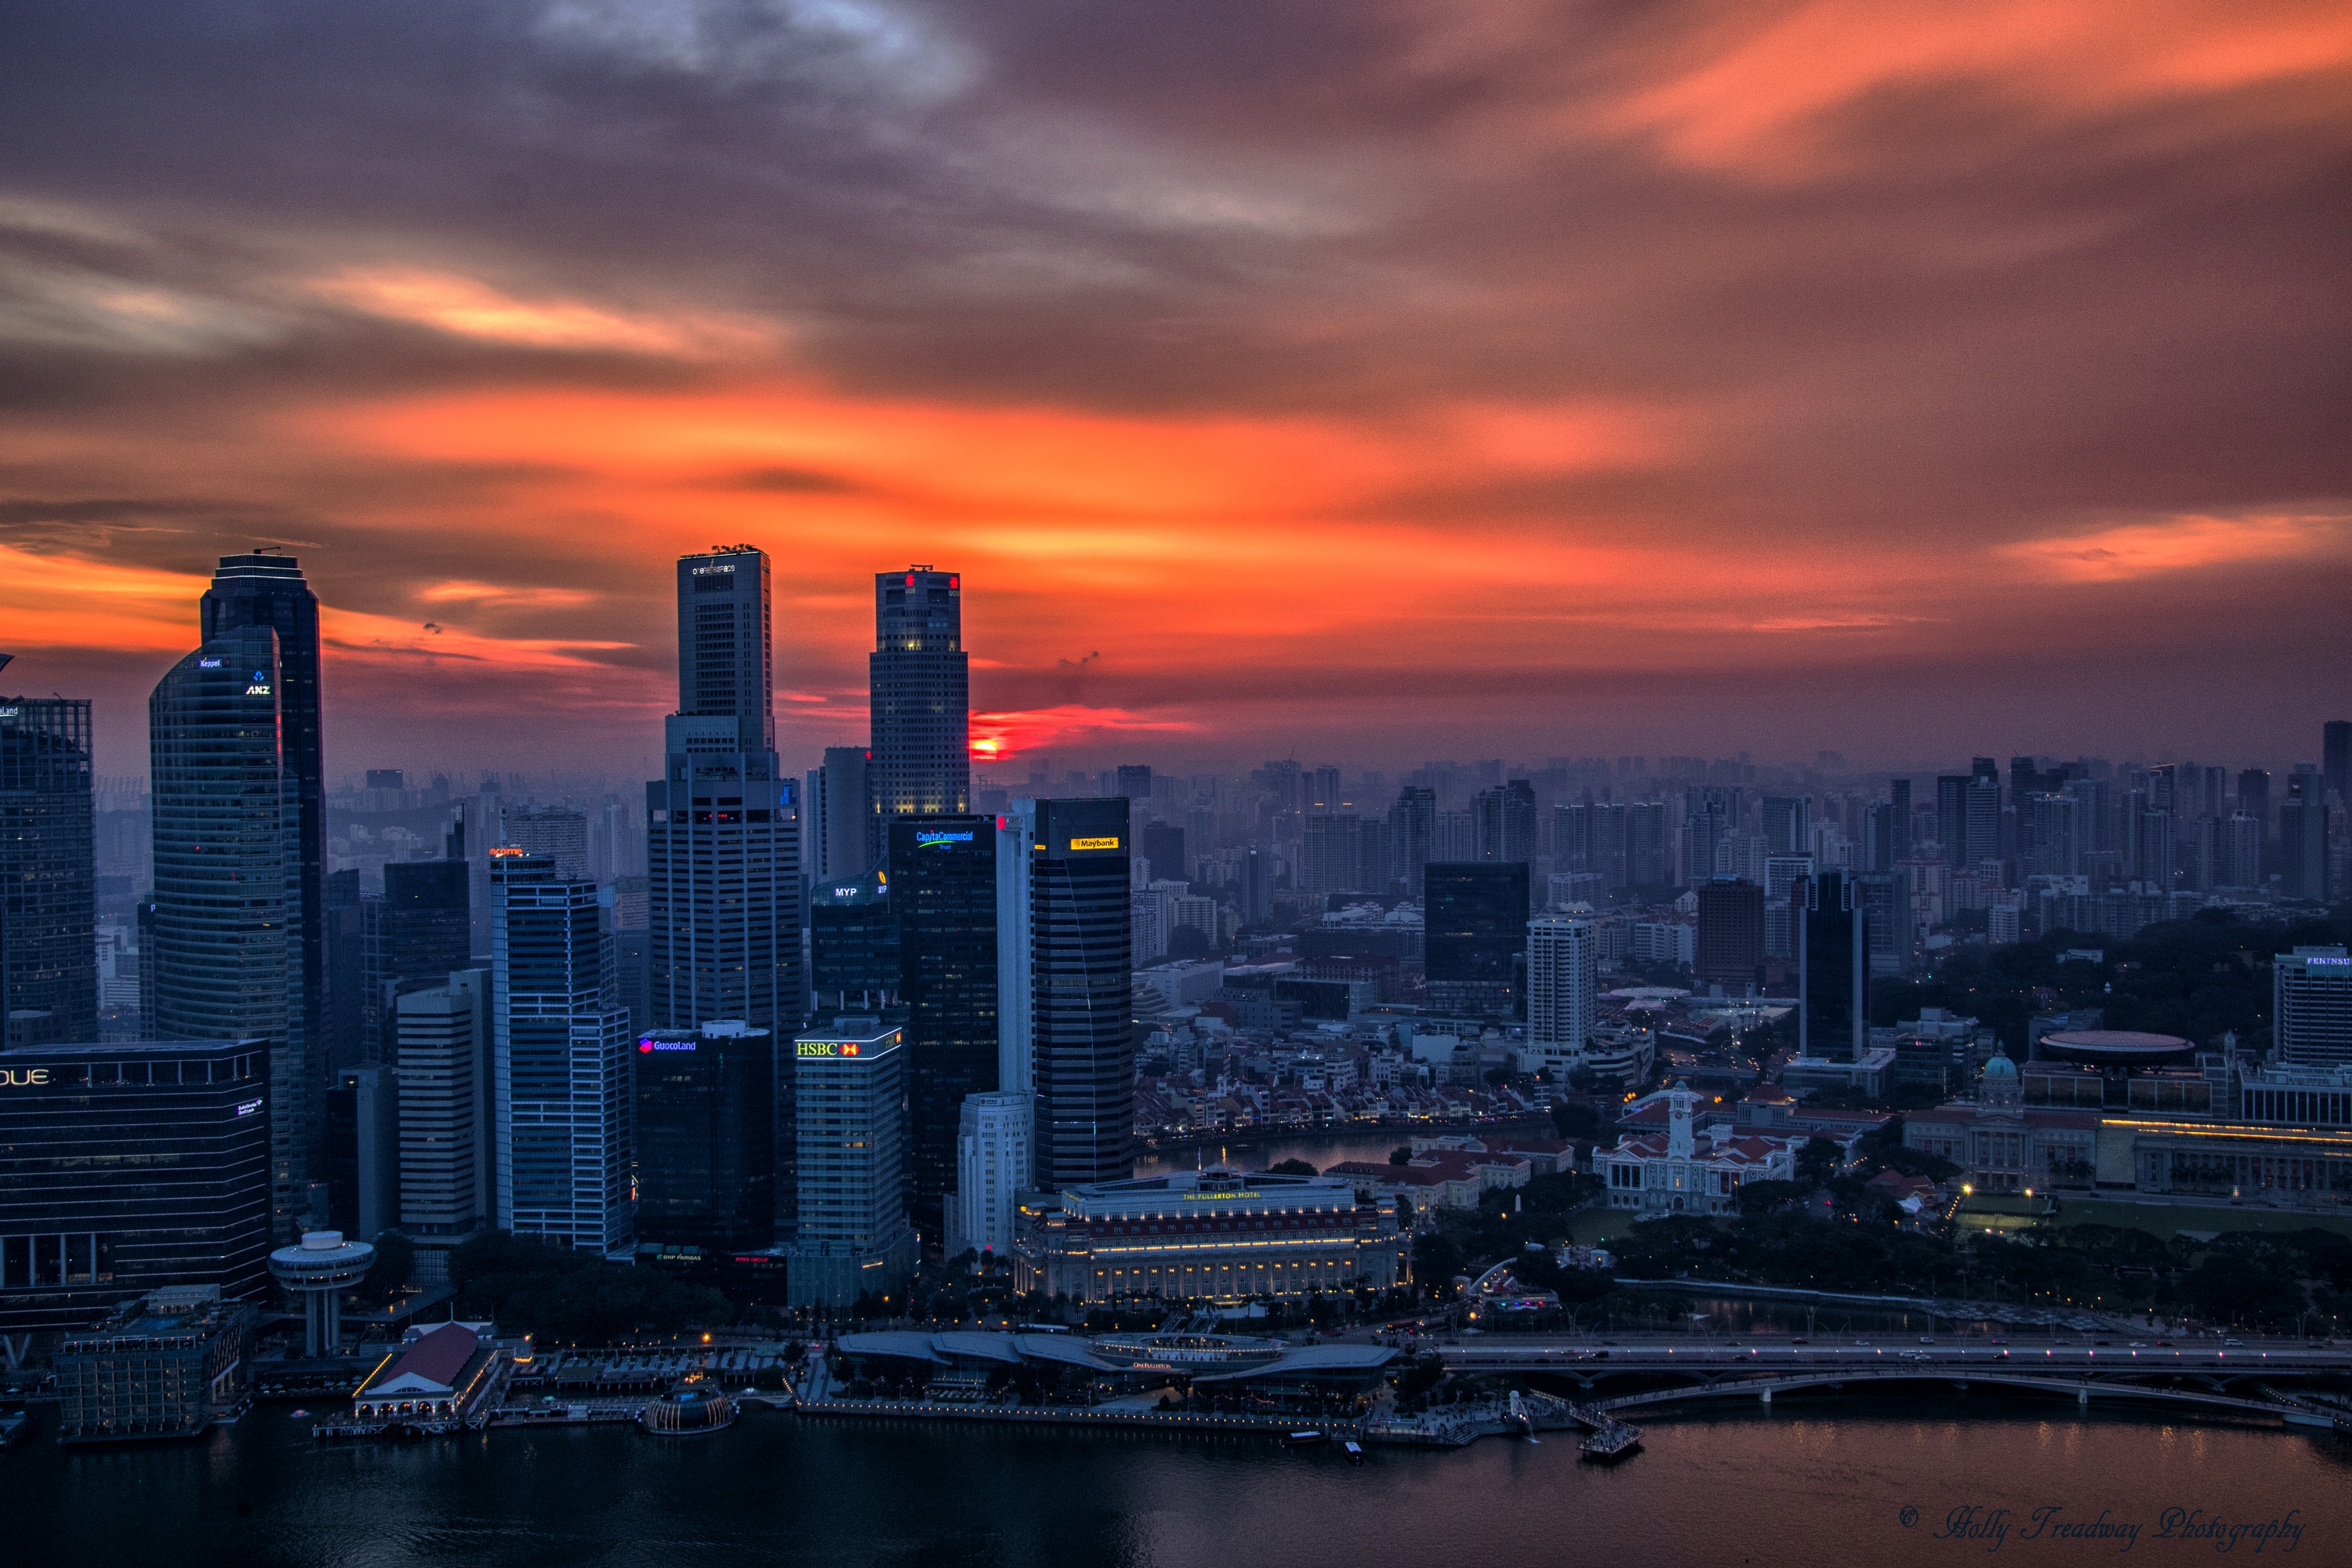 _D8A4095© Singapore sunset 1